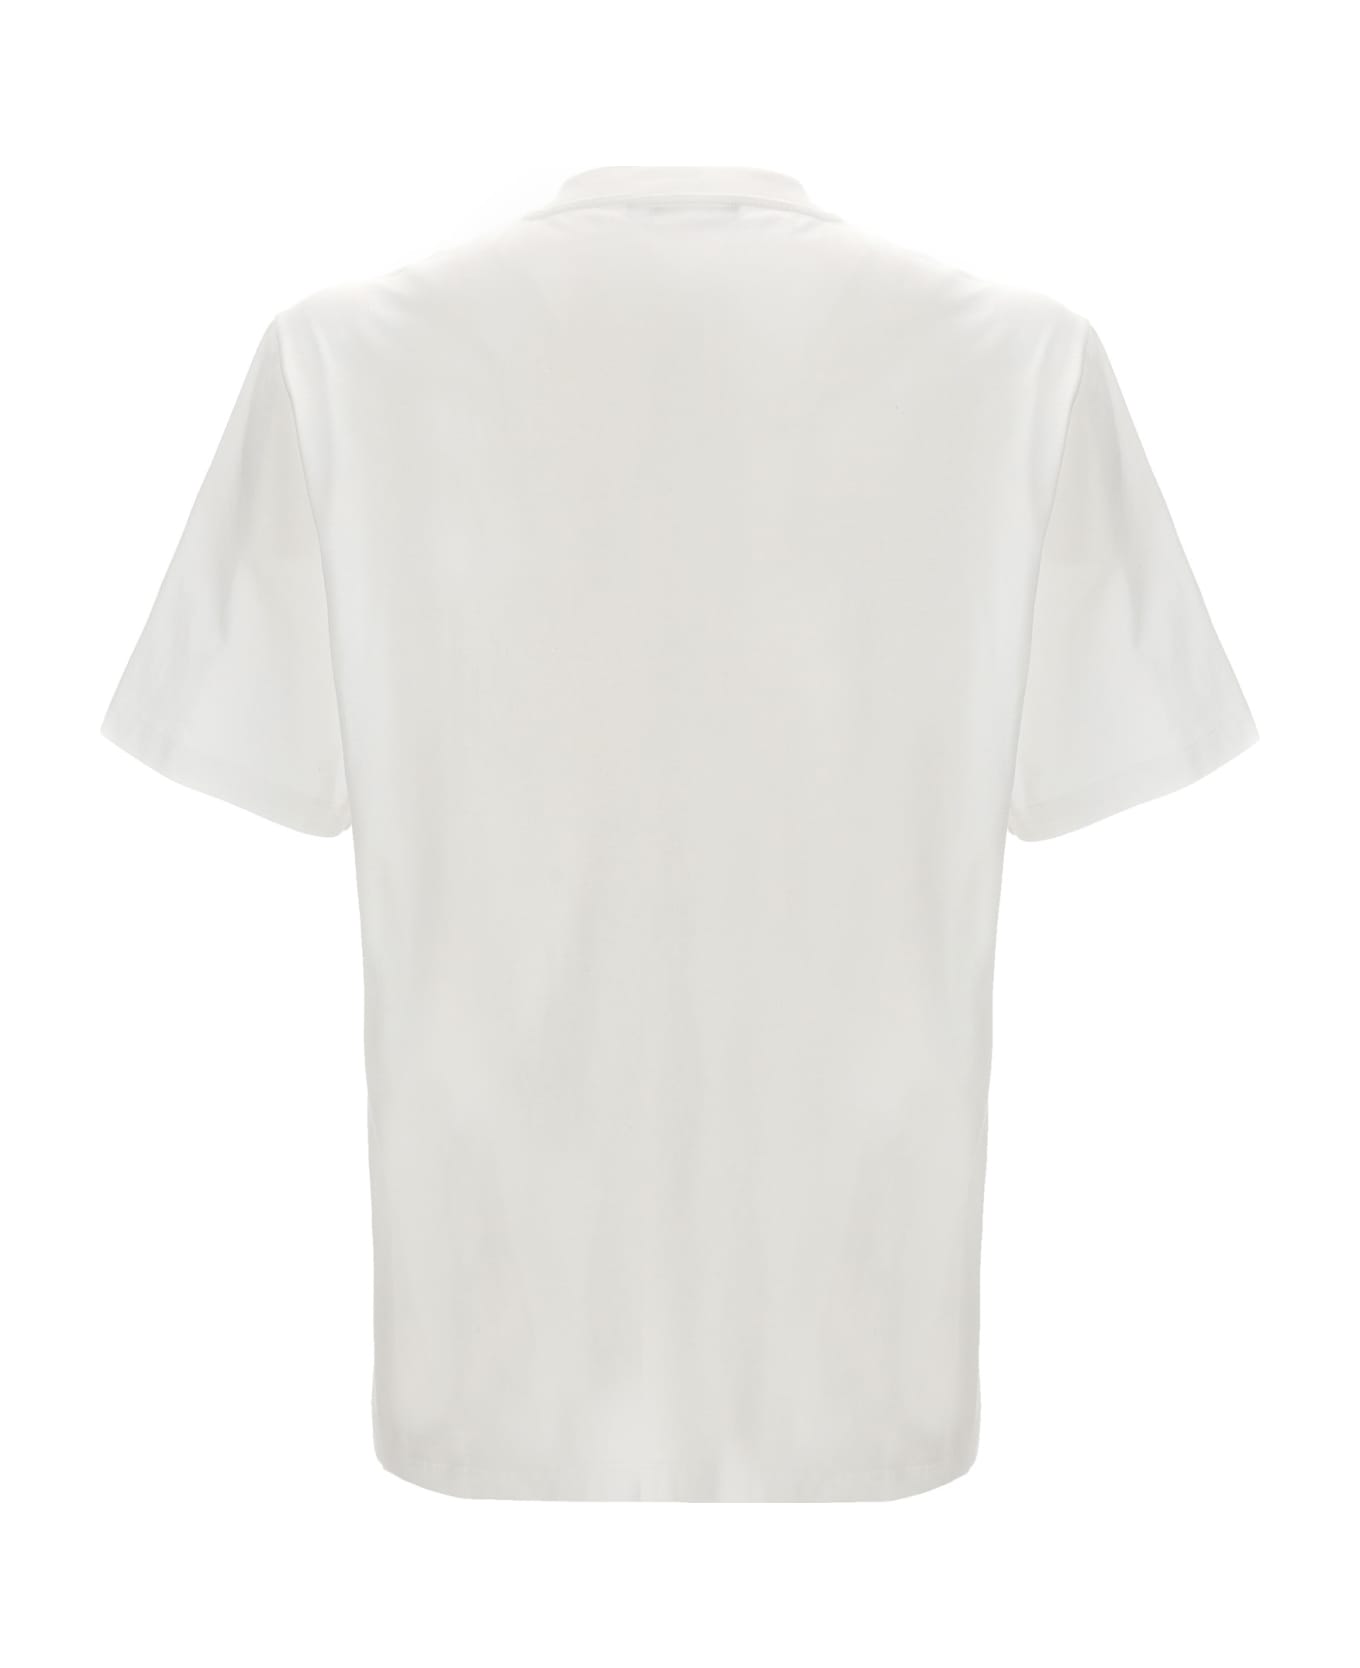 Versace Logo Embroidery T-shirt - White/Black シャツ